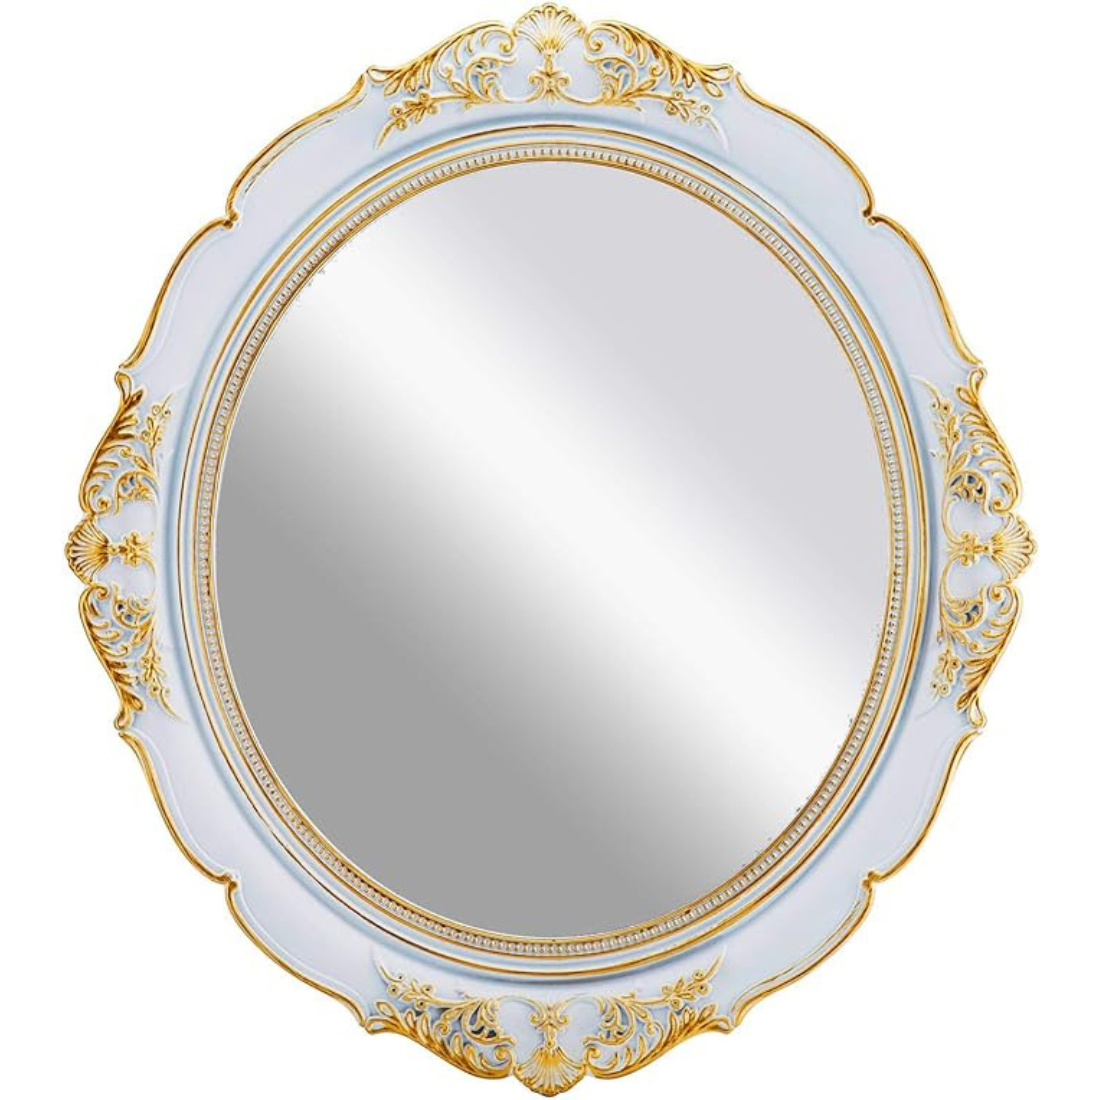 omirodirect wall mirror white